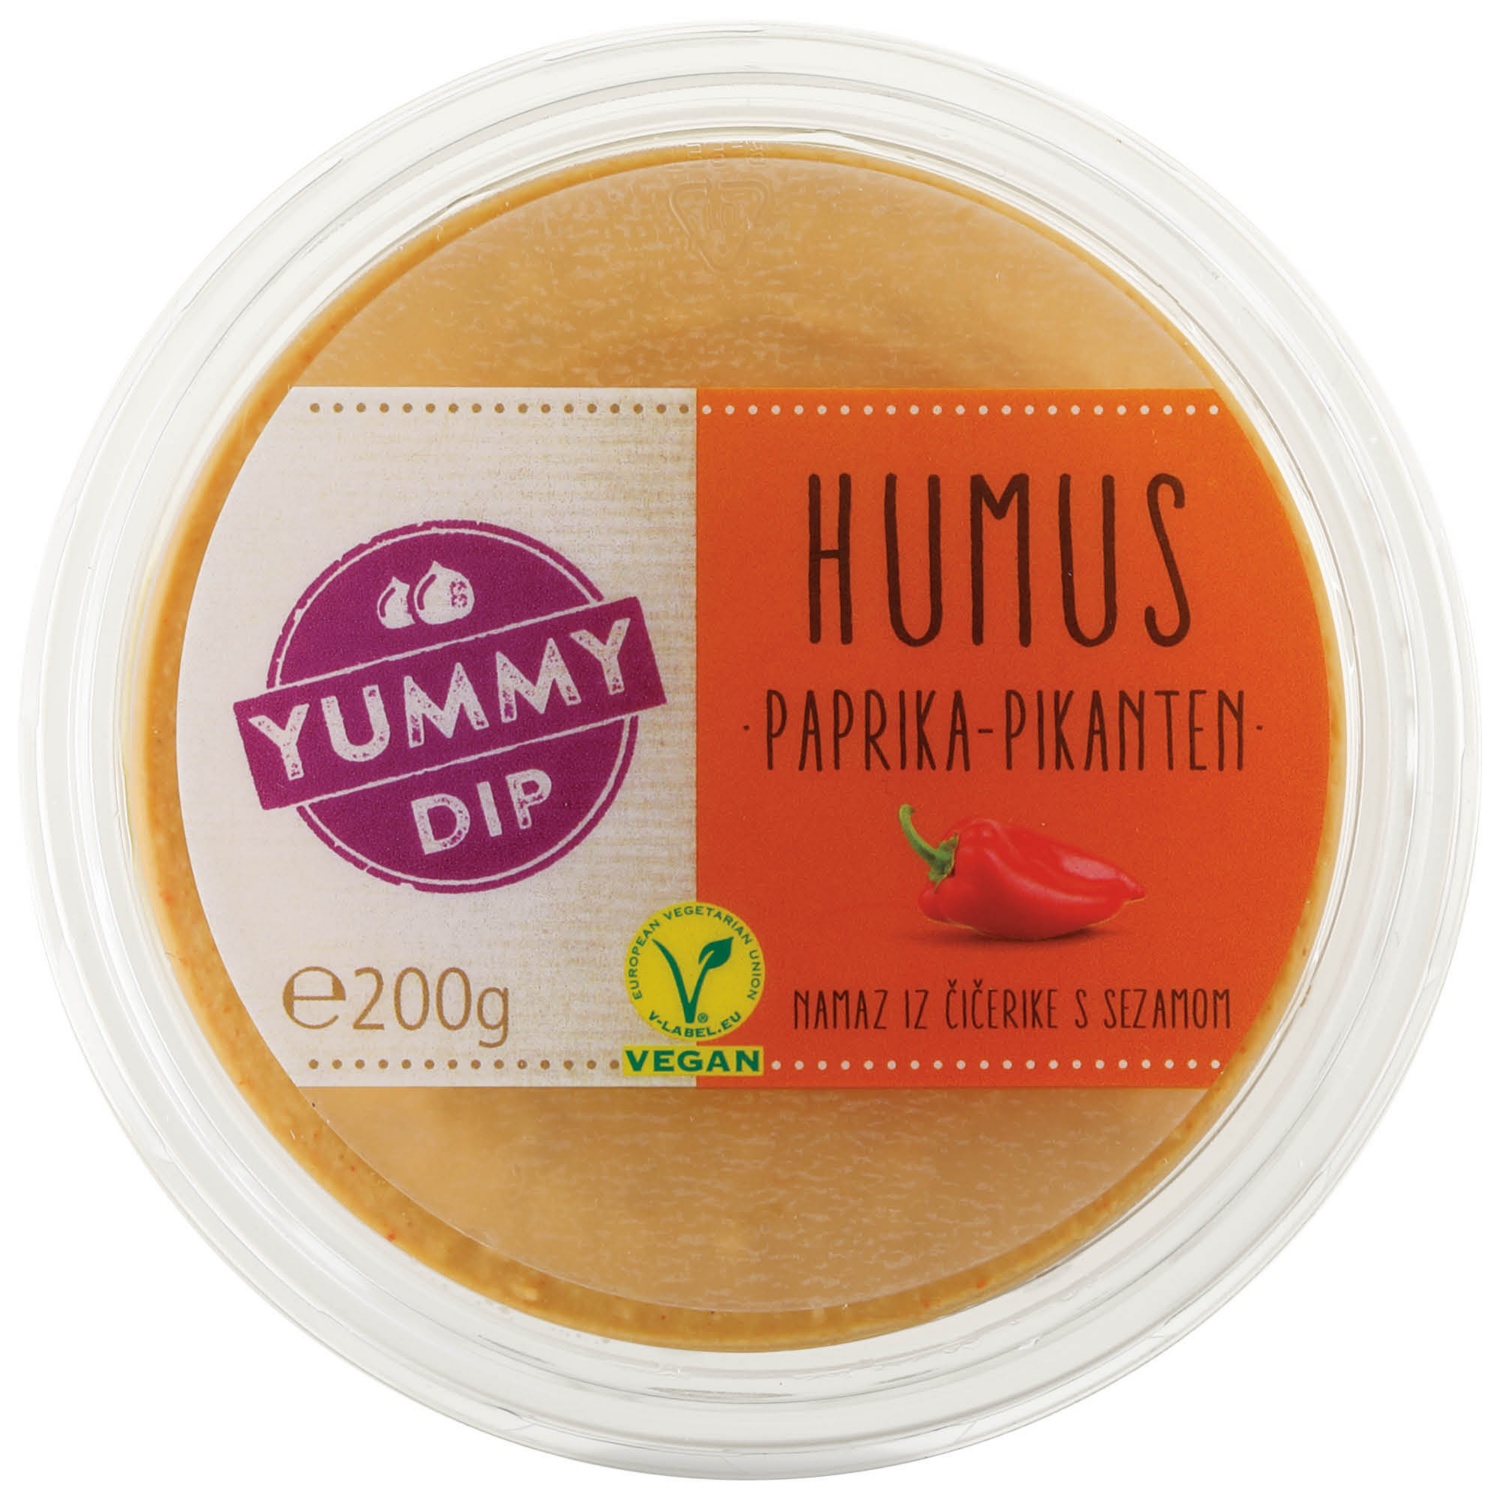 YUMMY DIP Hummus, paprica piccante